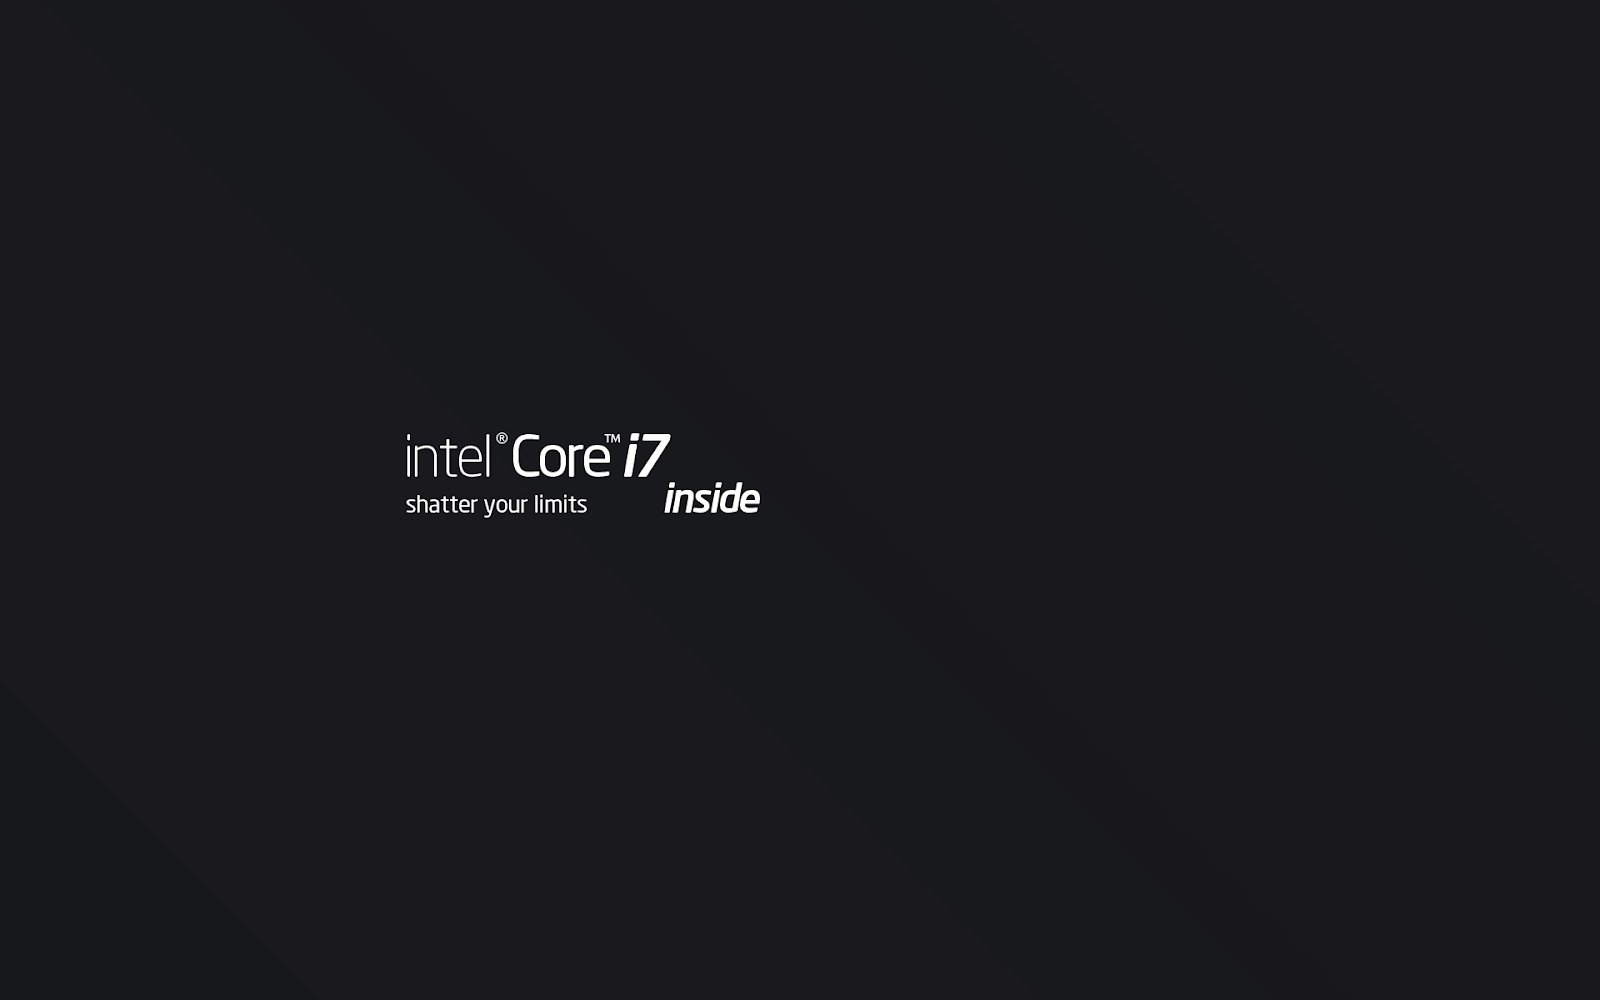 Intel Core i7 Wallpaper New Best Wallpapers indexwallpaper